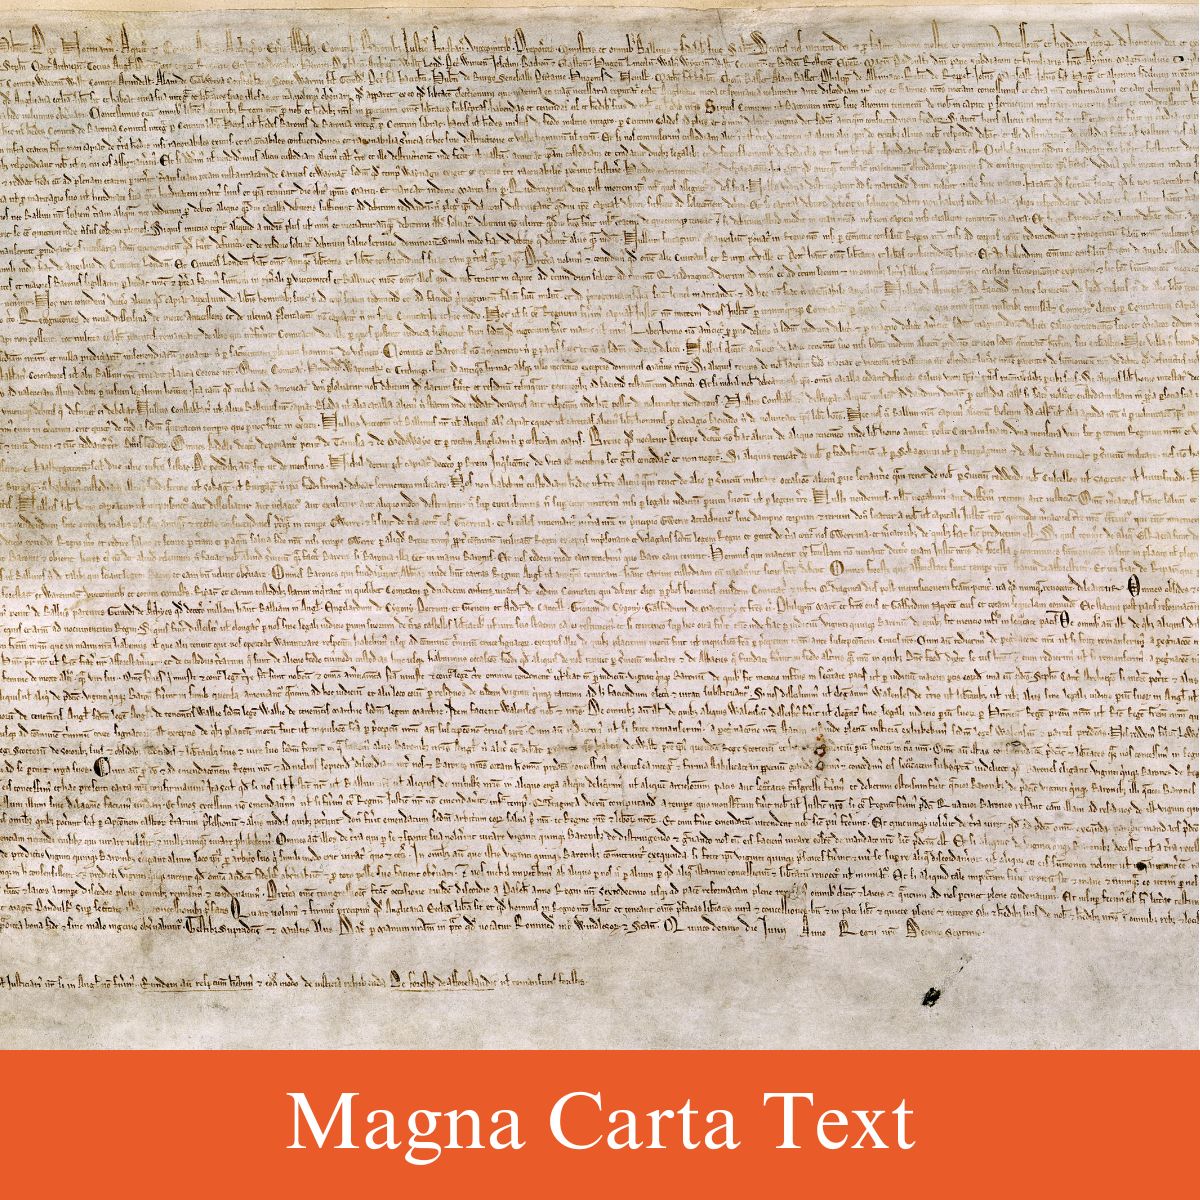 magna carta texts